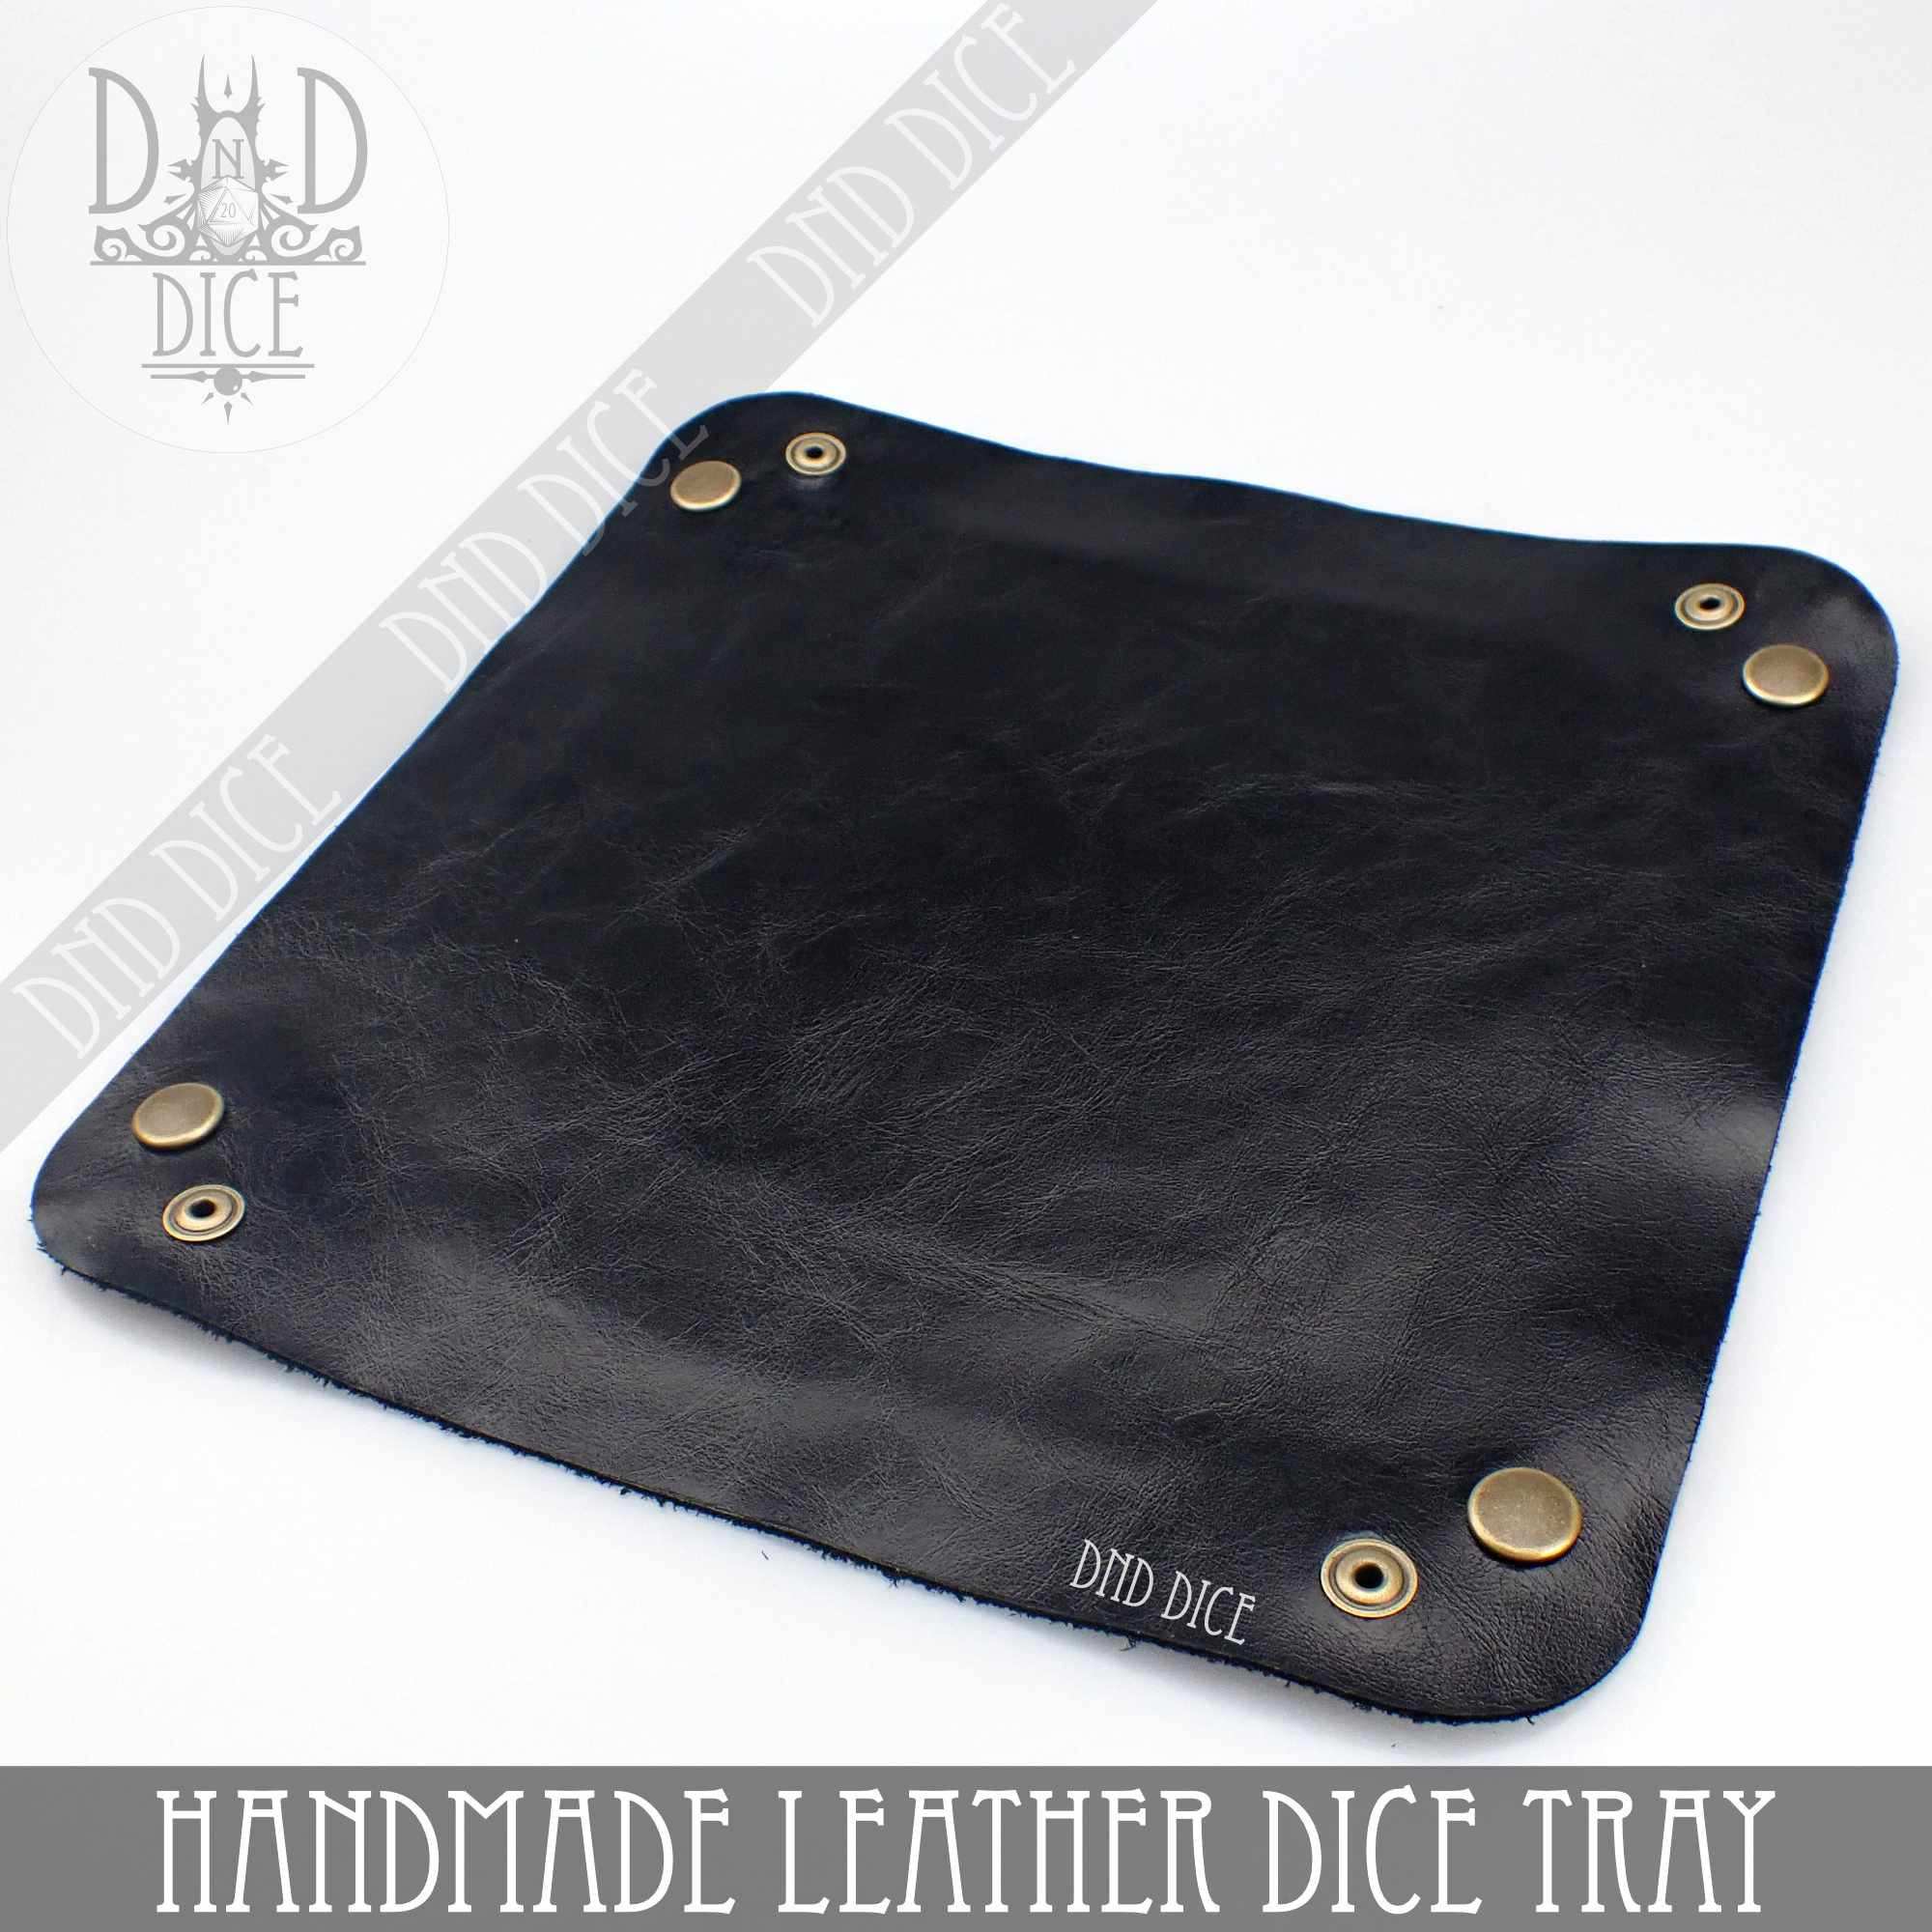 Italian Leather Dice Tray (Handmade)